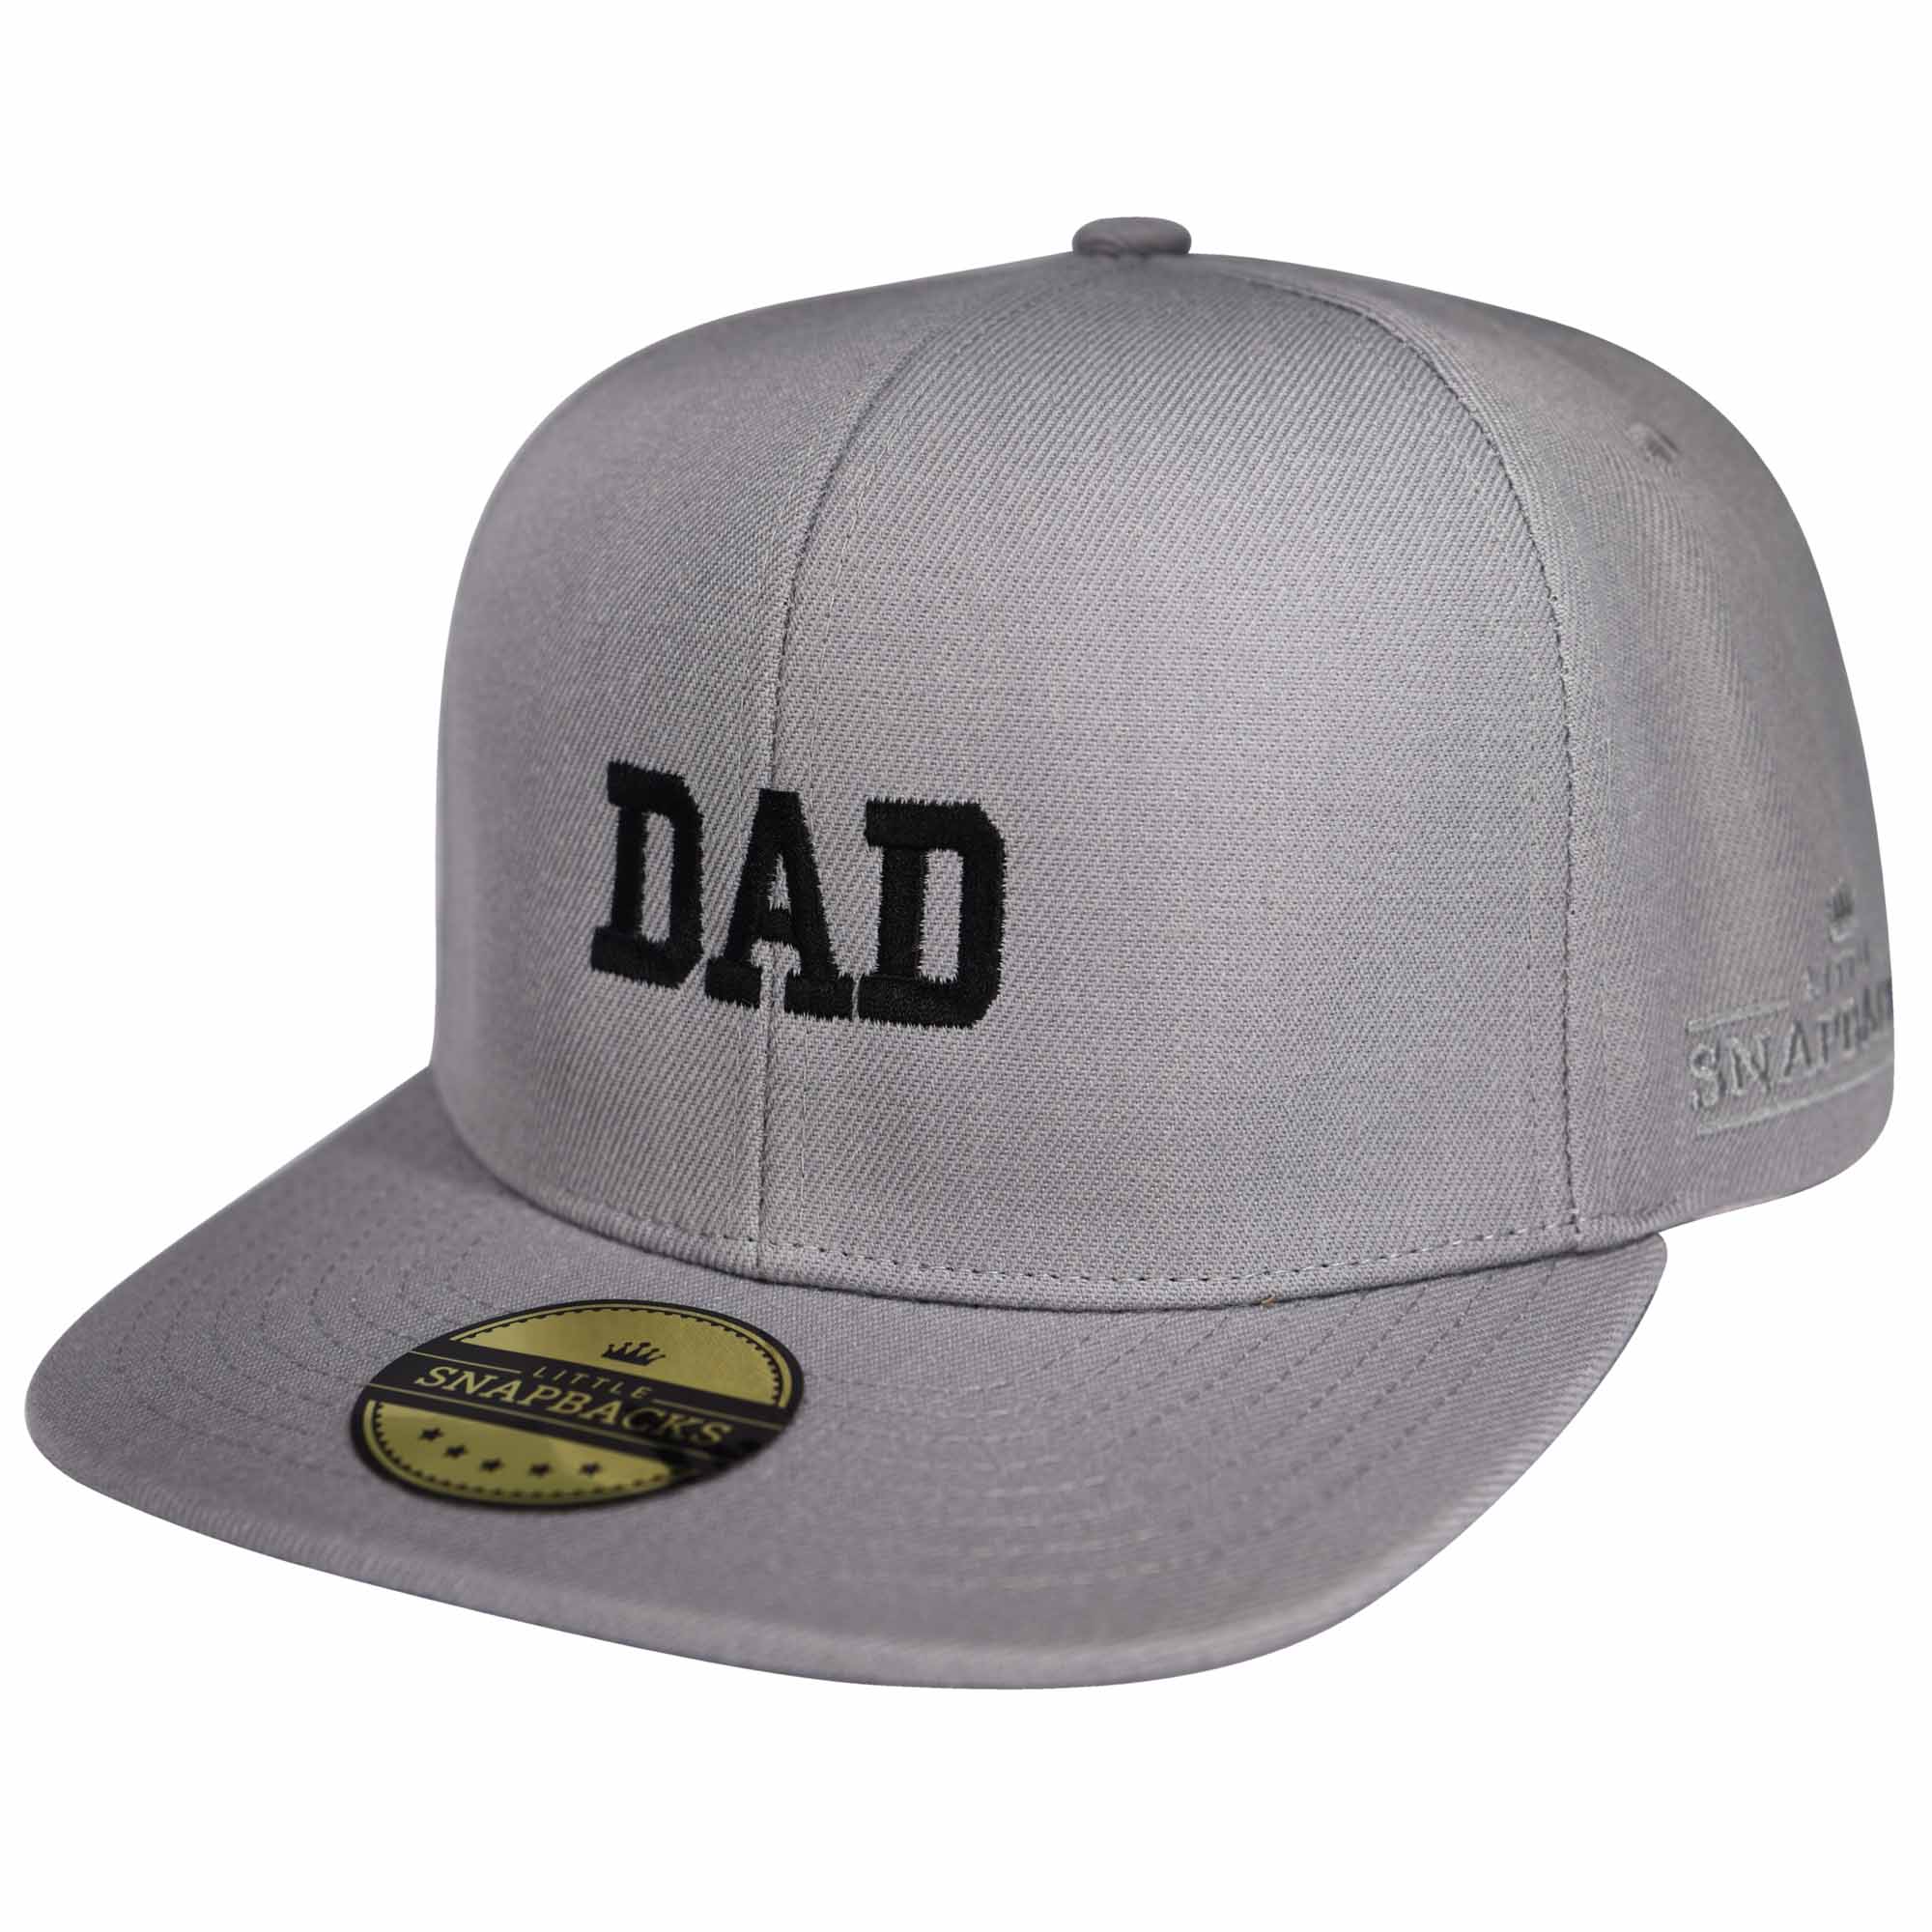 DAD Personalised Snapback - Grey with black thread